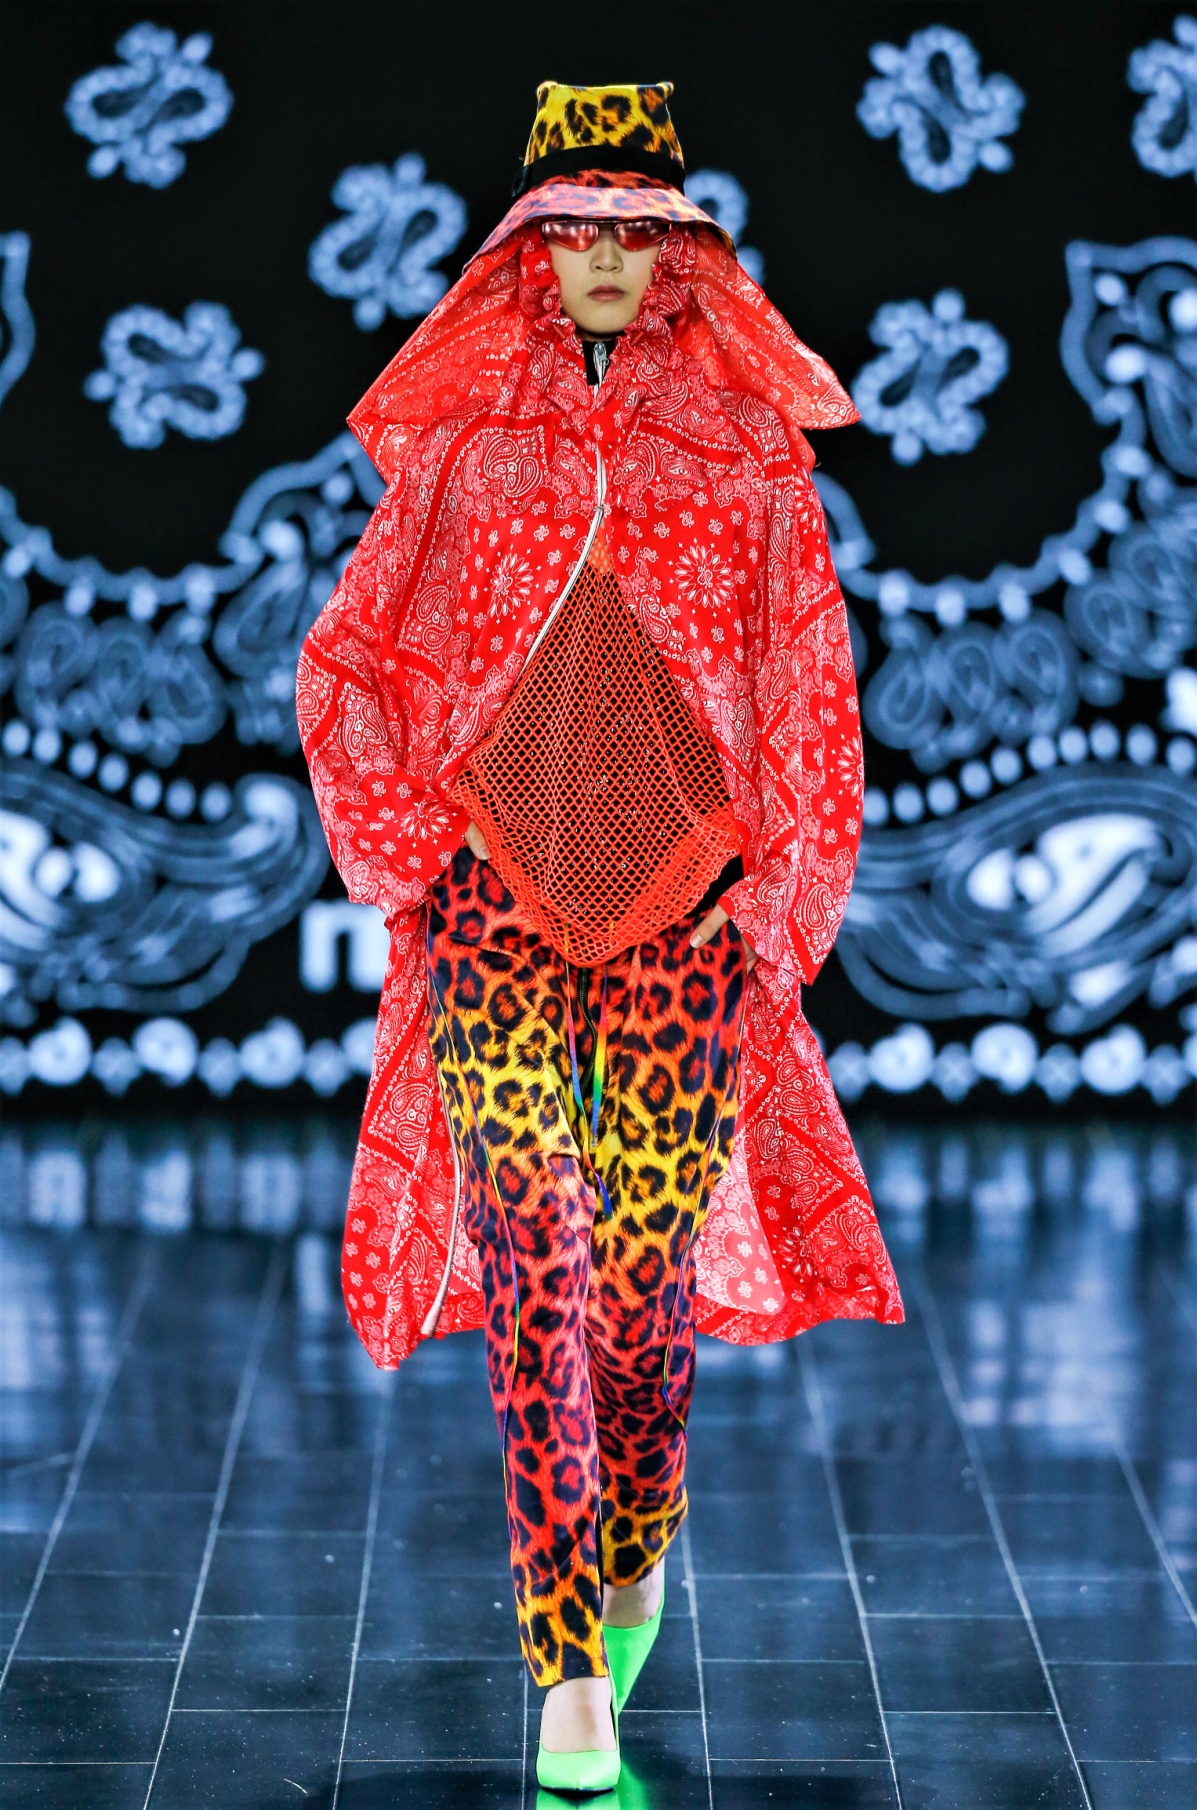 Silk Road ribyeung funky stwear orange leopard pants 1-21.jpg